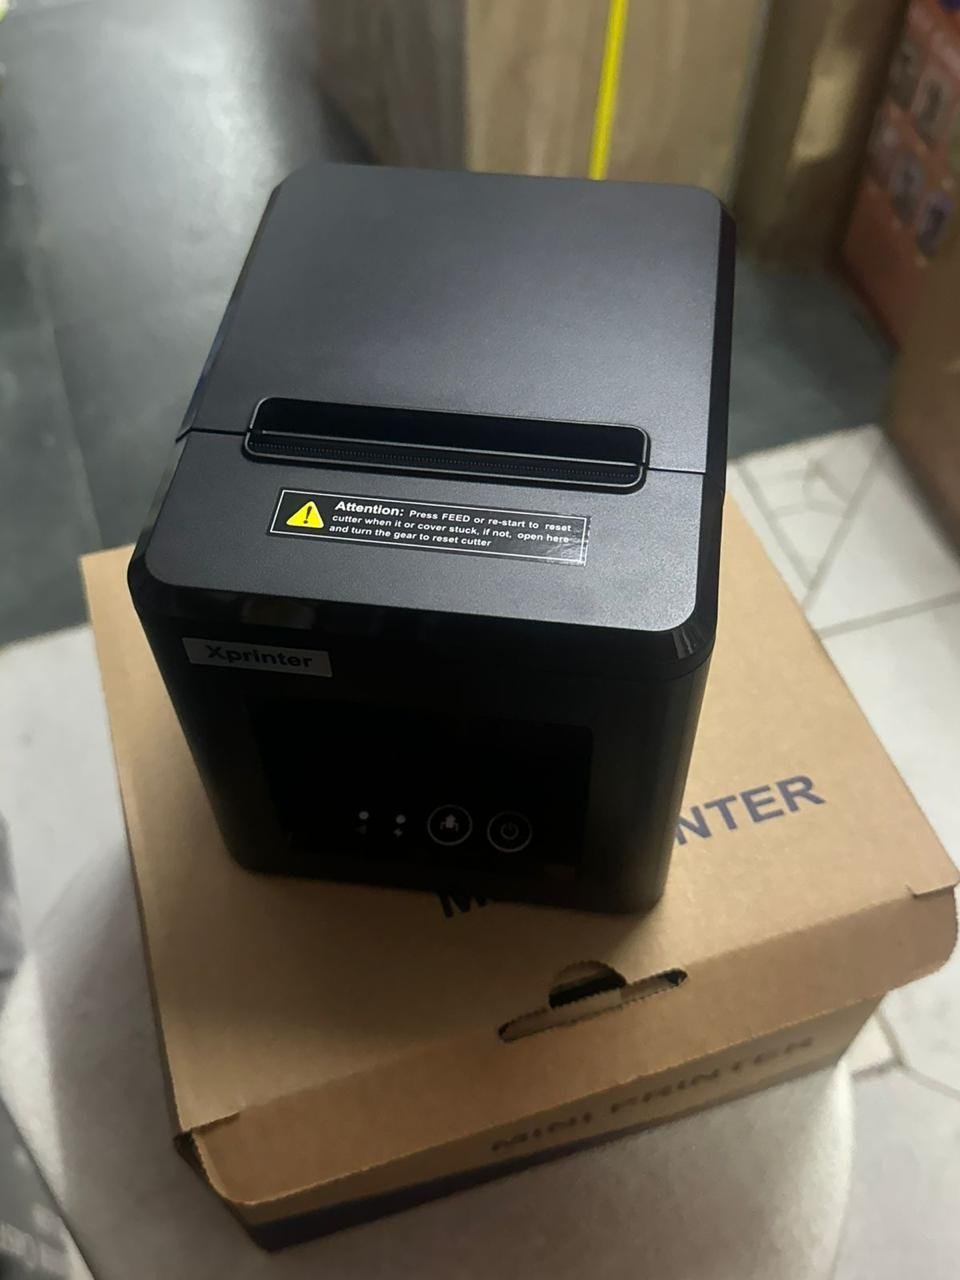 Xprinter usb thermal Printer                                                  Xprinter Usb+Lan thermal printer – Product insights and advice